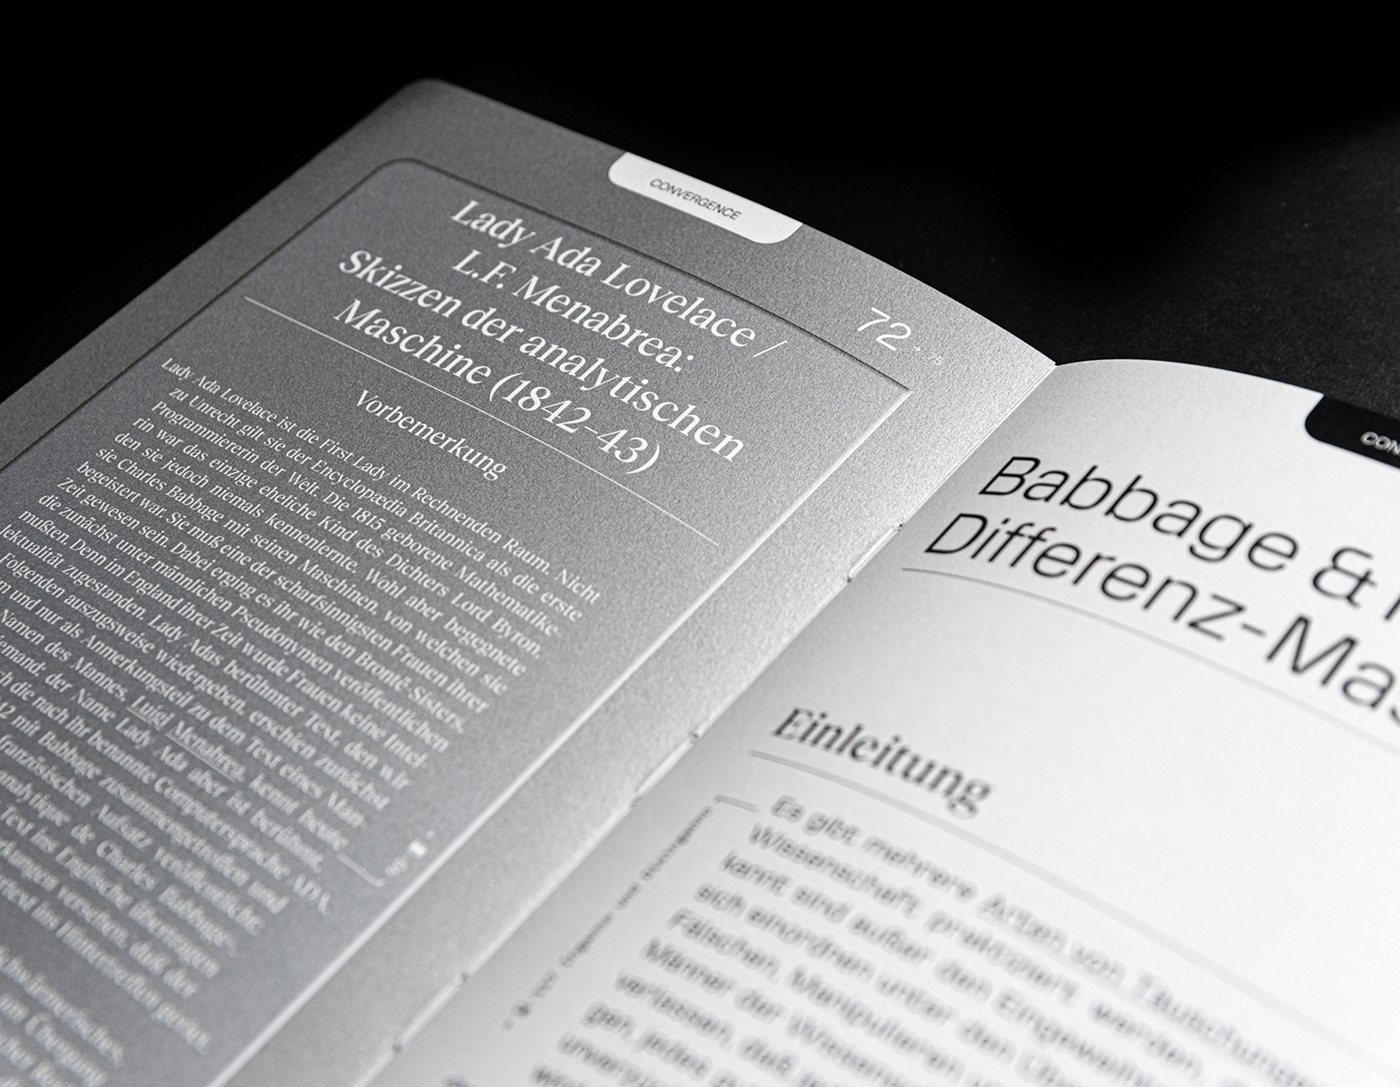 ai google philosophy  meditation baroque editorial design  book cover typography   art direction  visual identity